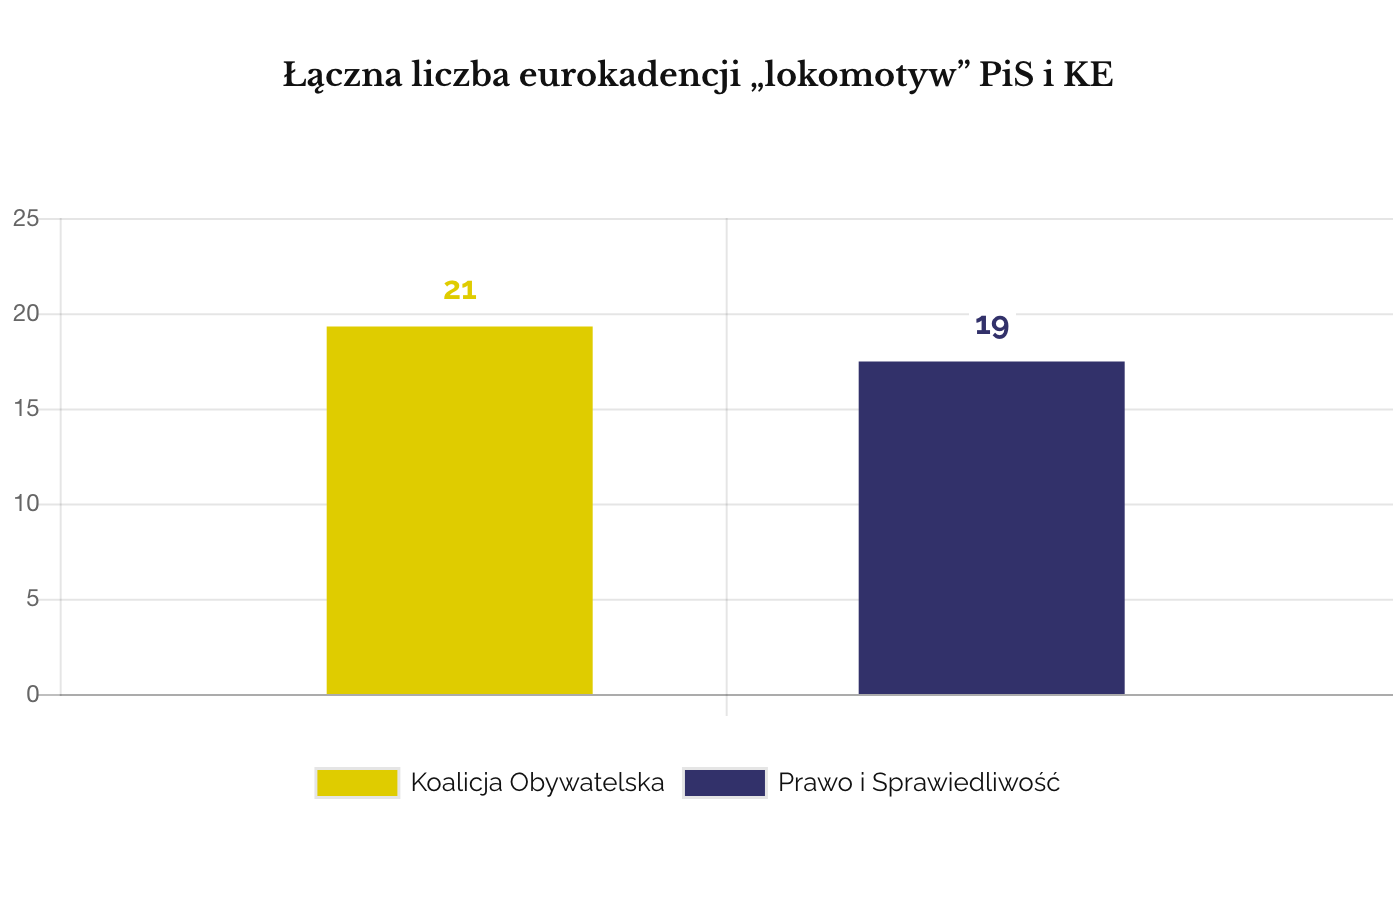 Liczba kadencji jedynek i dwójek PiS i KE do EP 2019 (Bruksela)